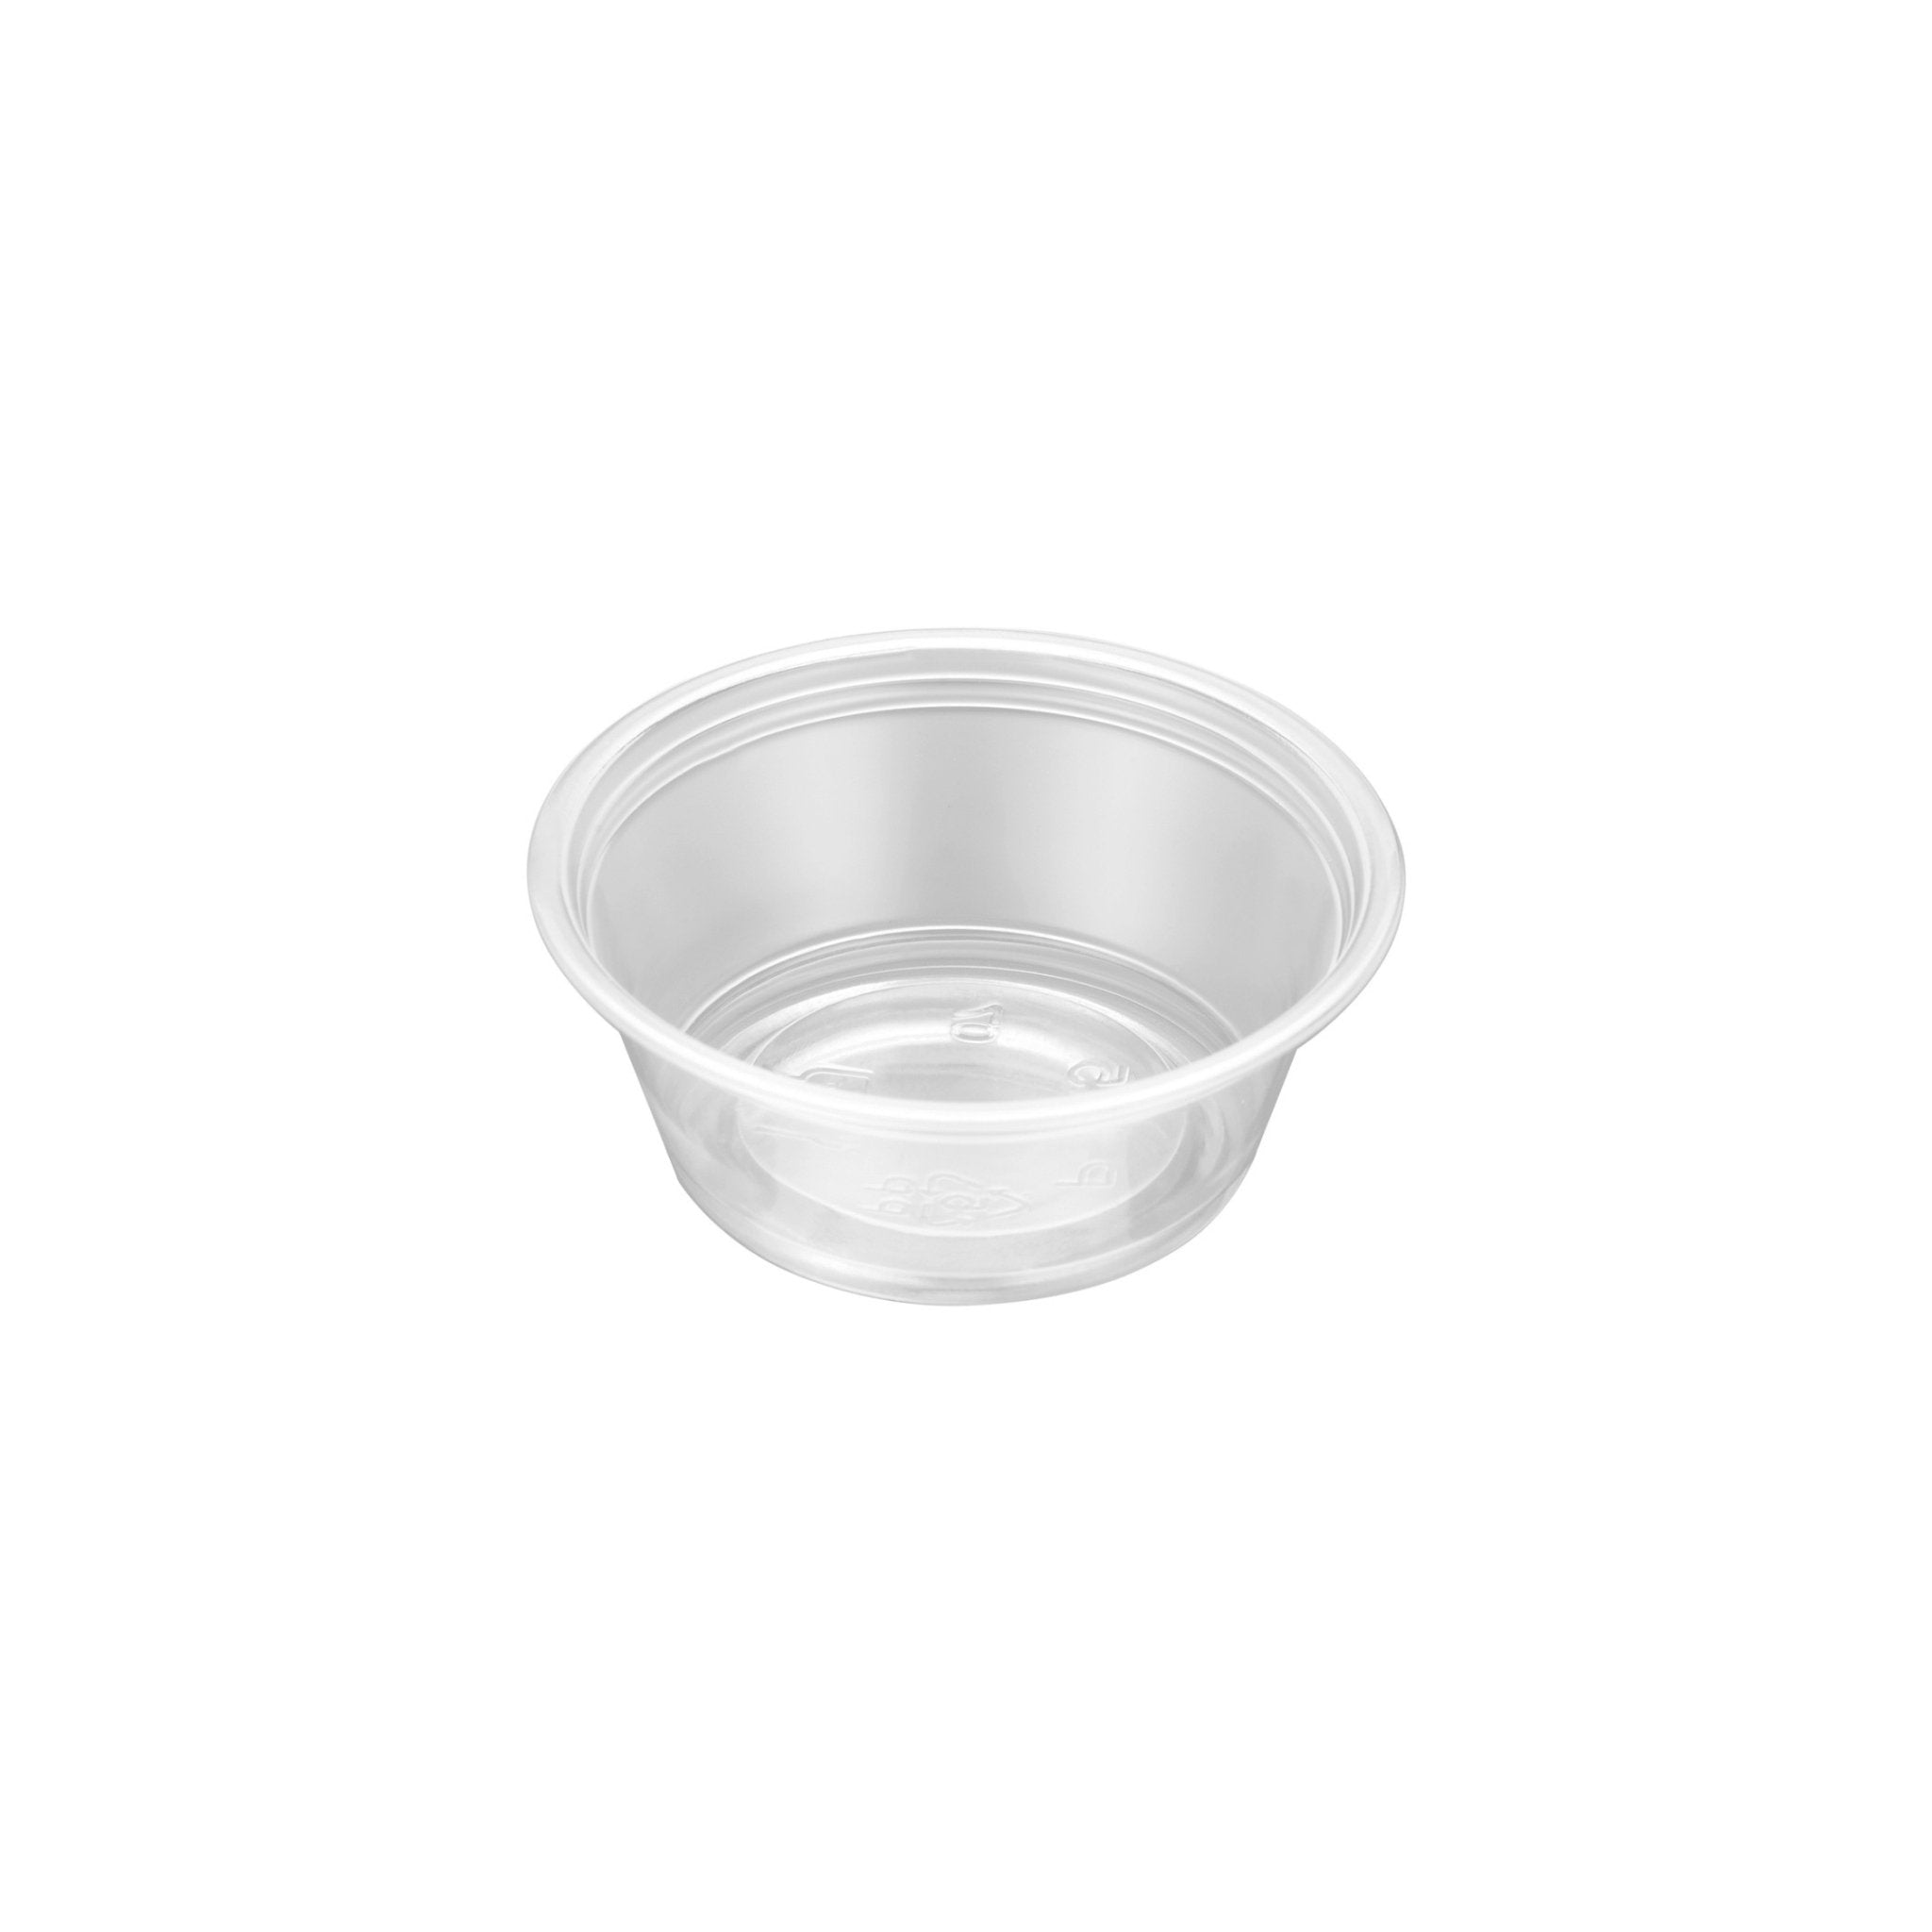 1.5oz Portion Cups, 2500pc - Feast Source